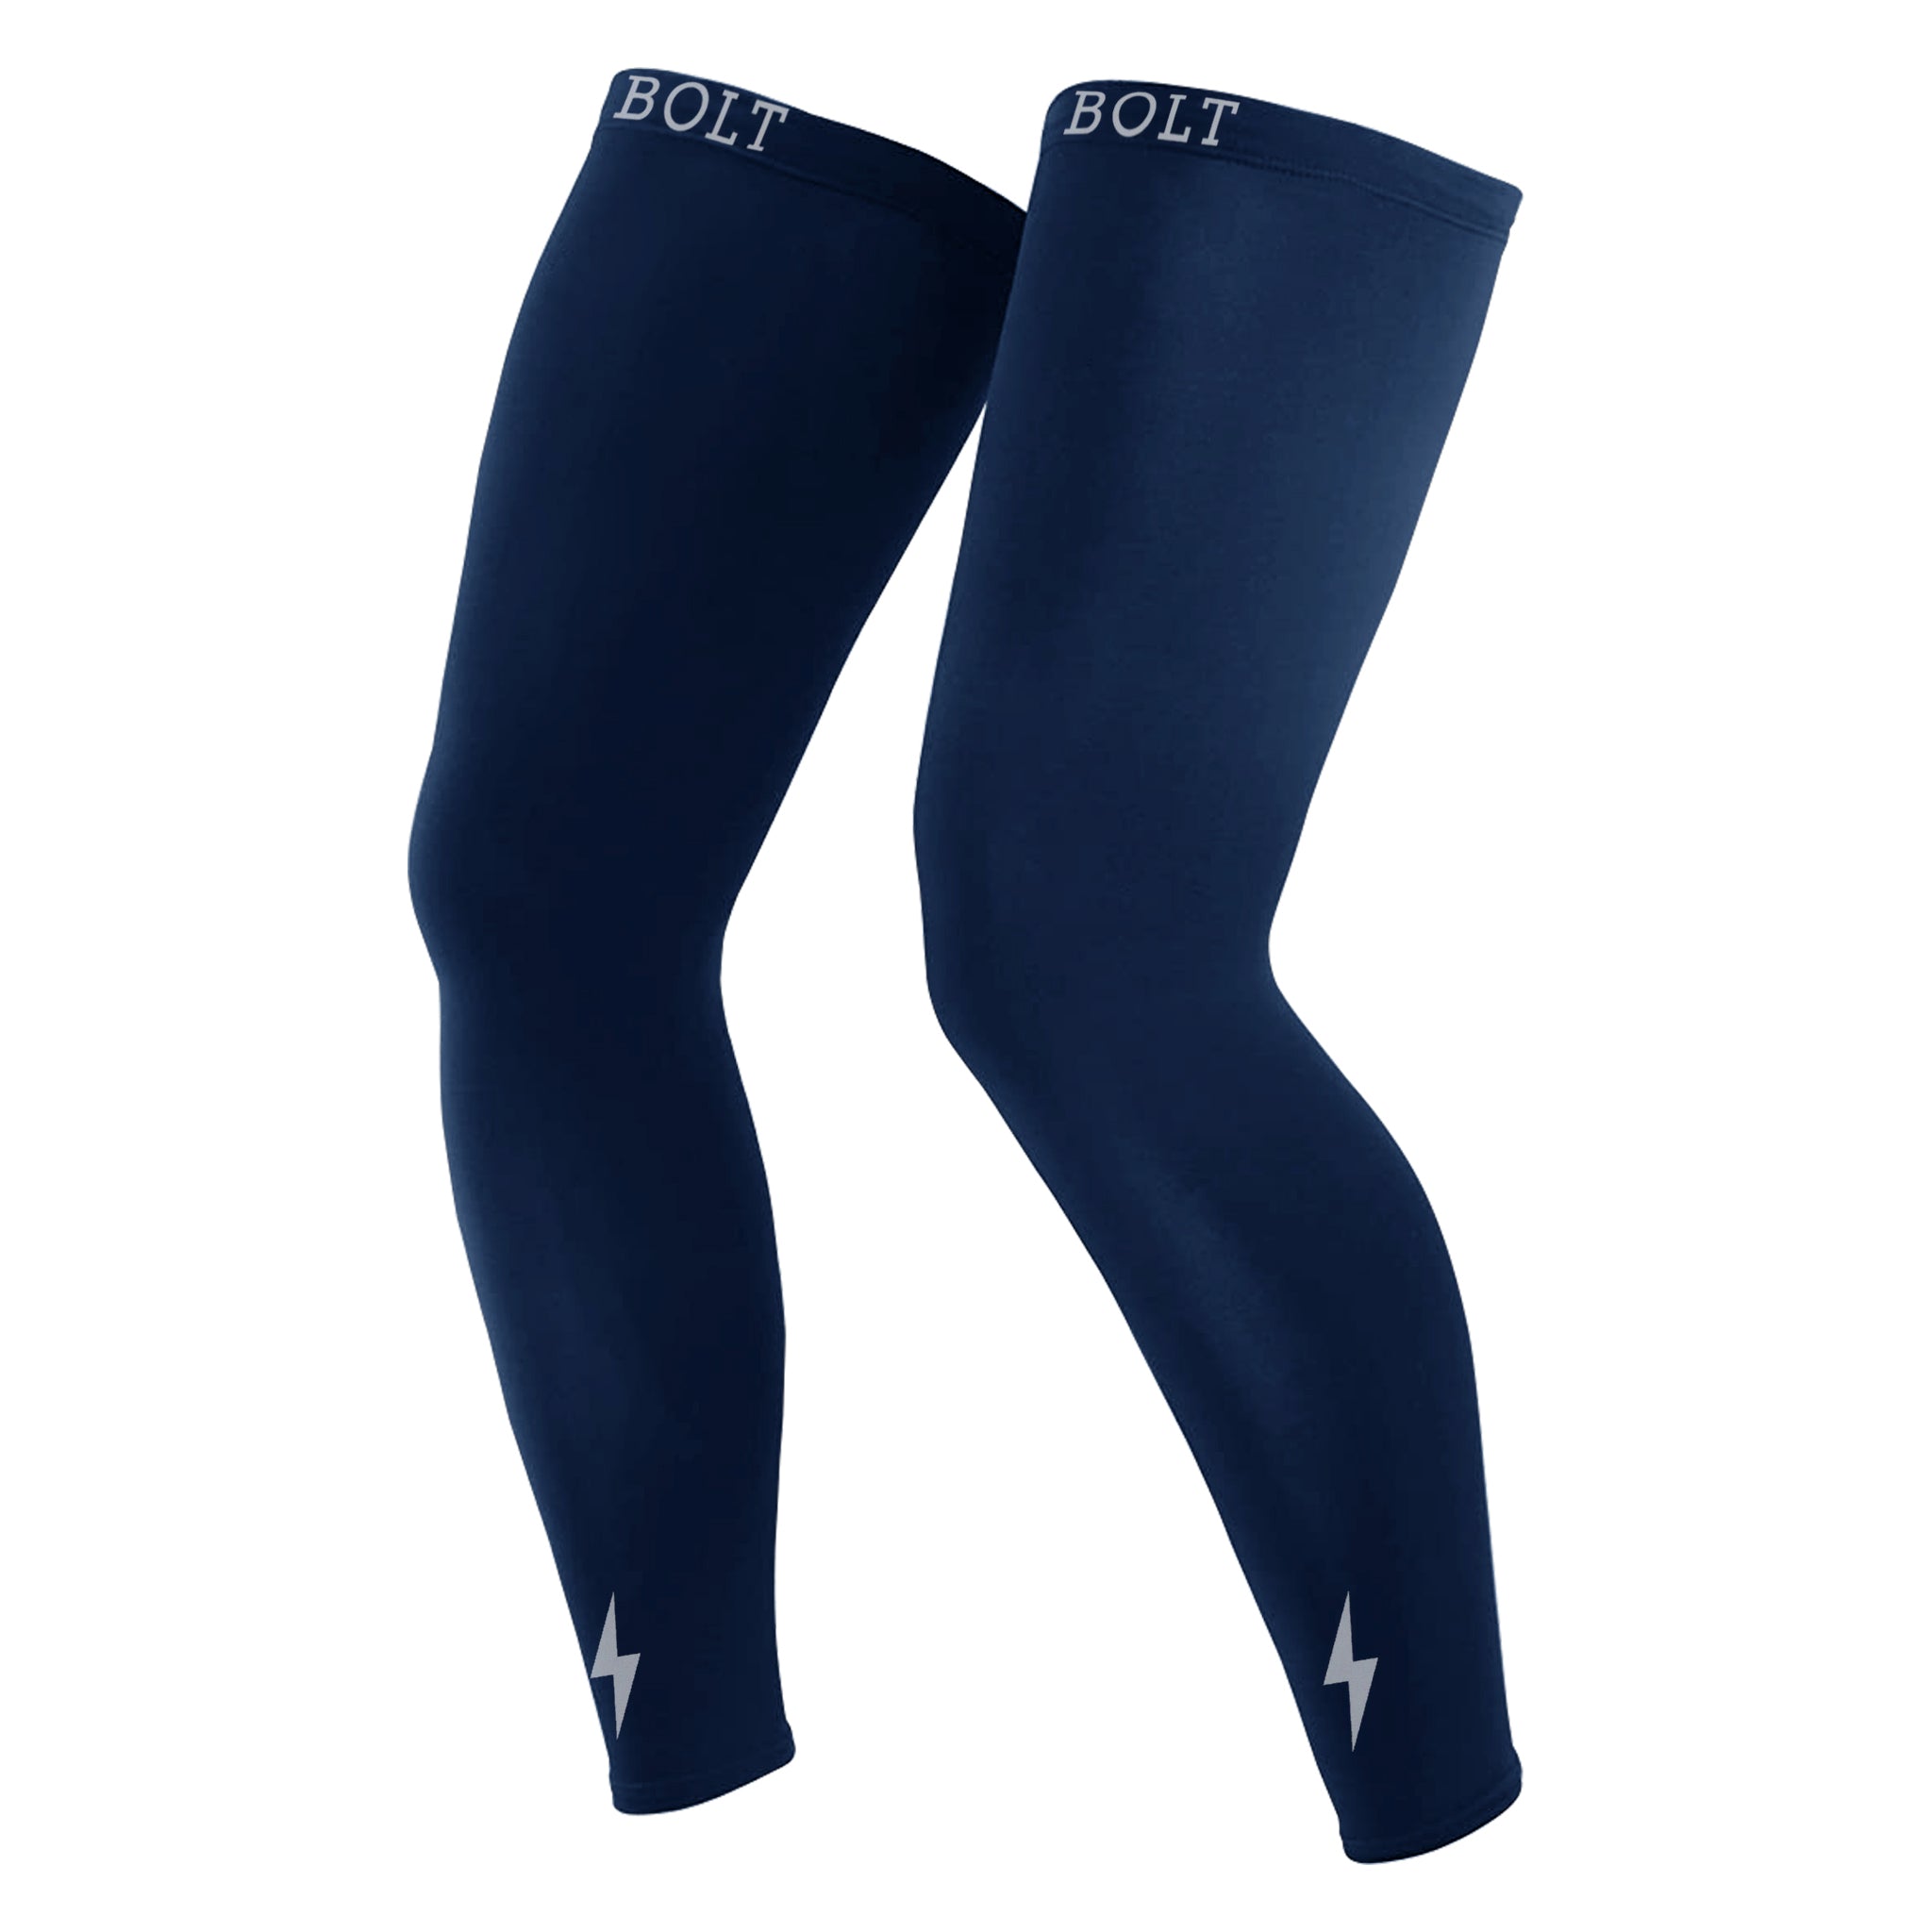 BRUCE BOLT Xtra Long Compression Leg Sleeves (pair) - NAVY